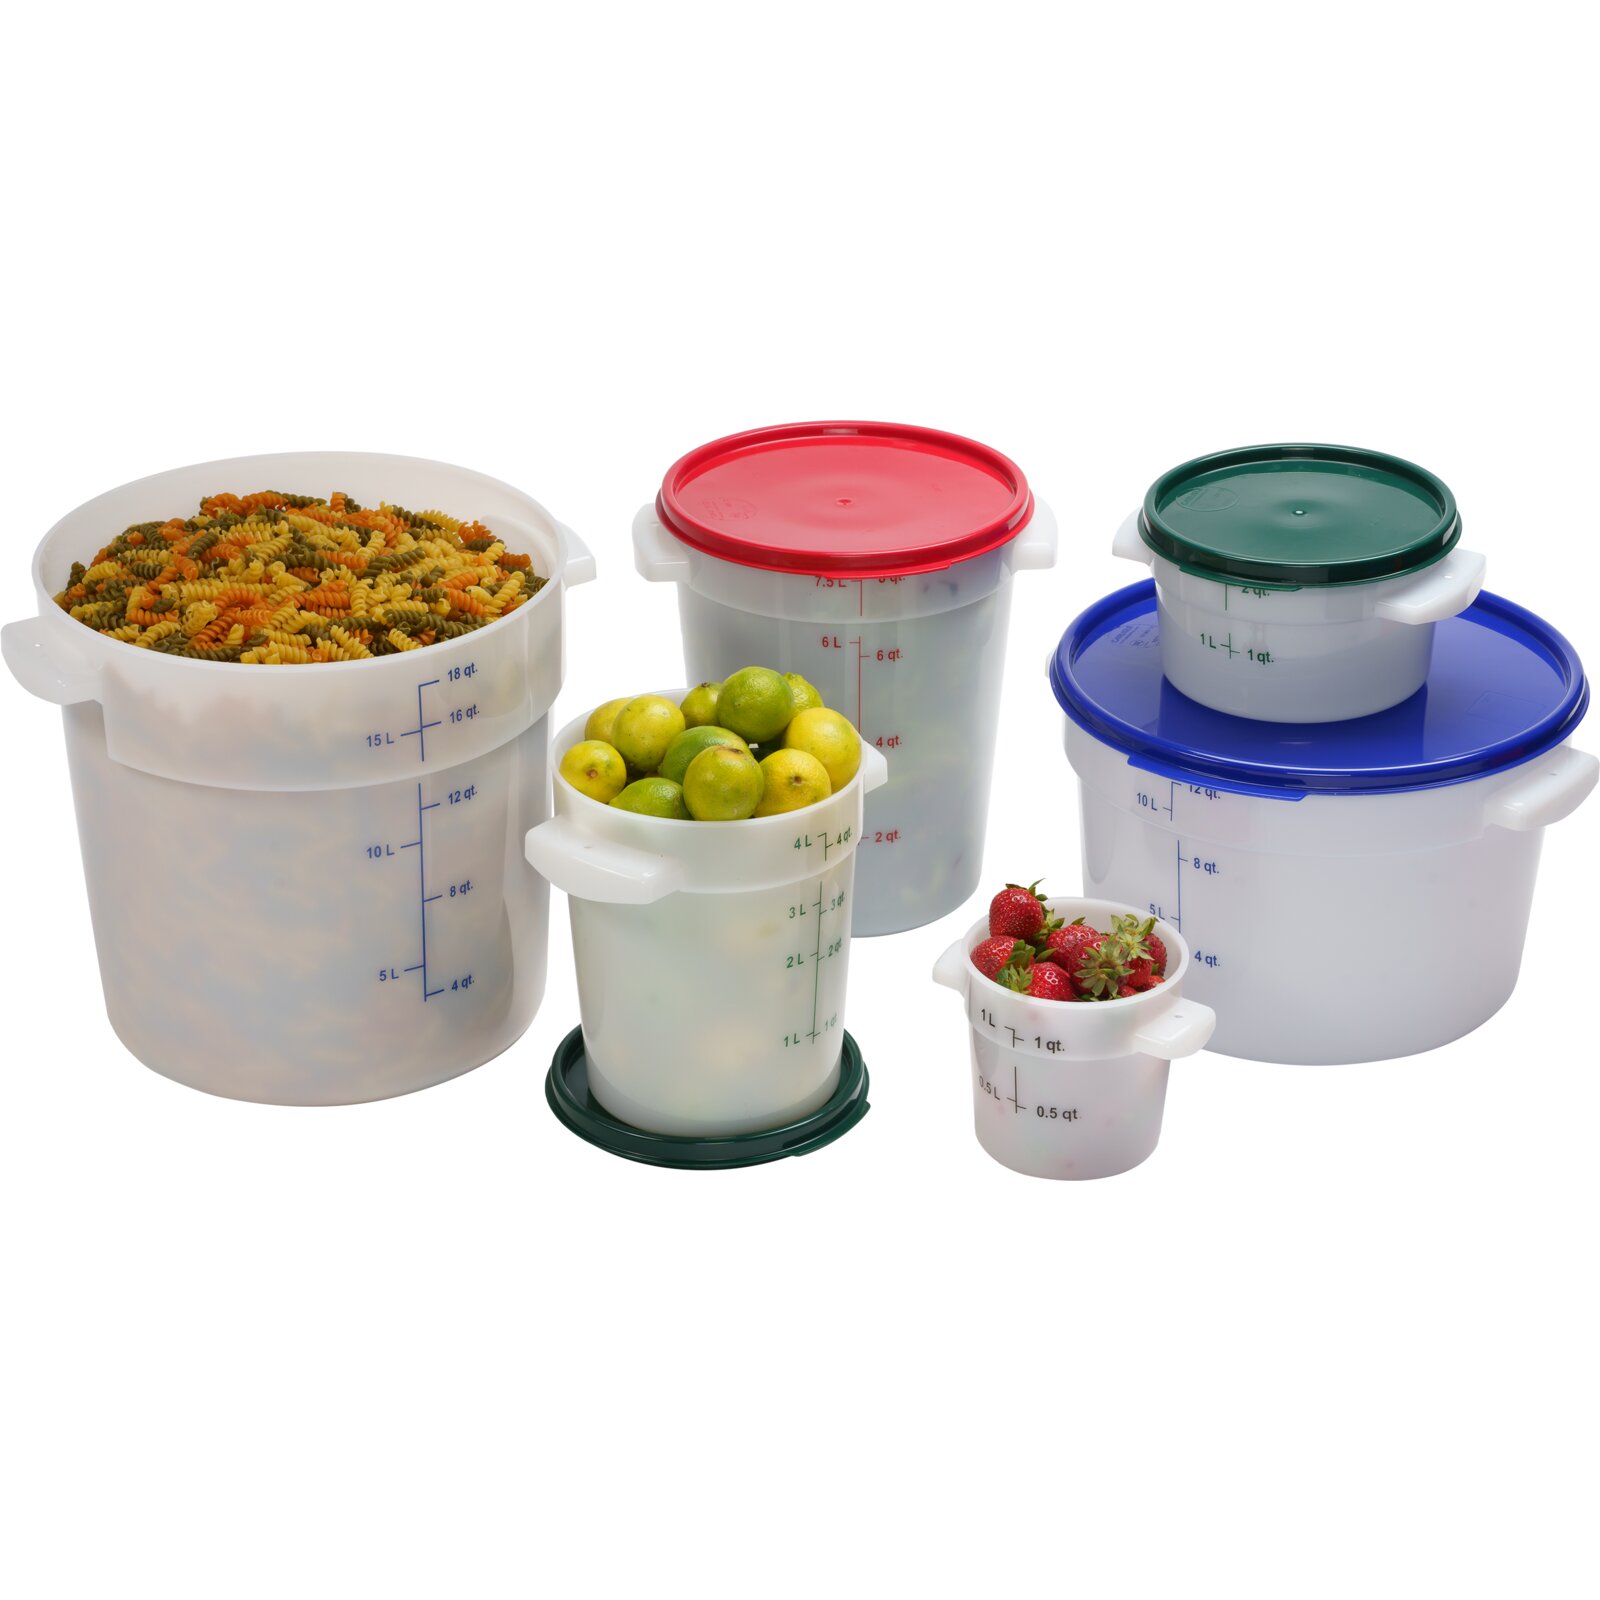 Chloe-Rose 8 Container Food Storage Set